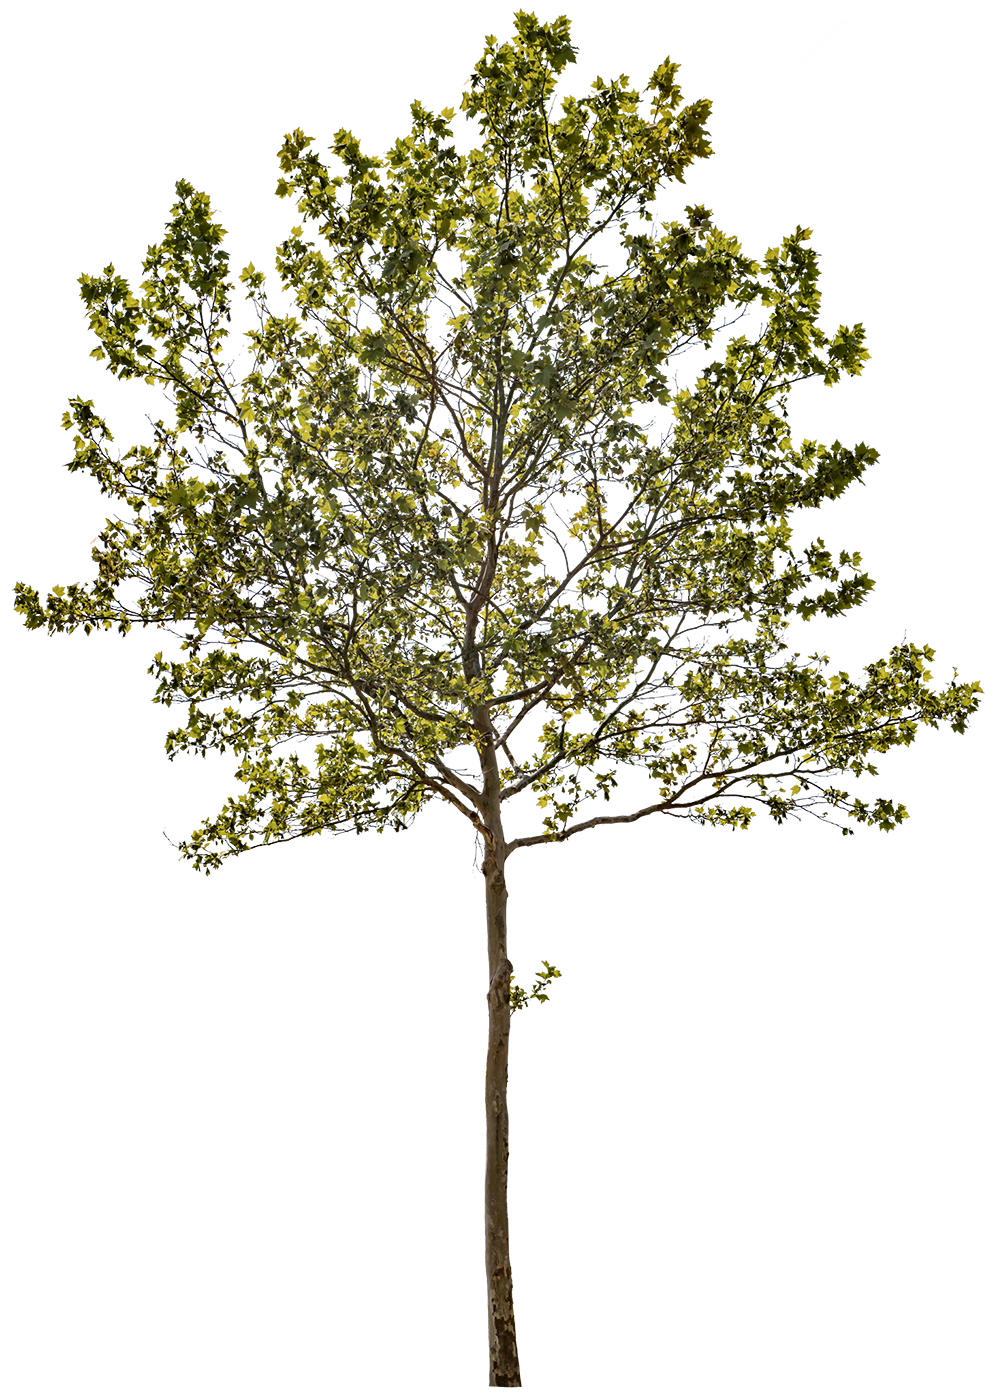 Platanus acerifolia m12 - cutout trees